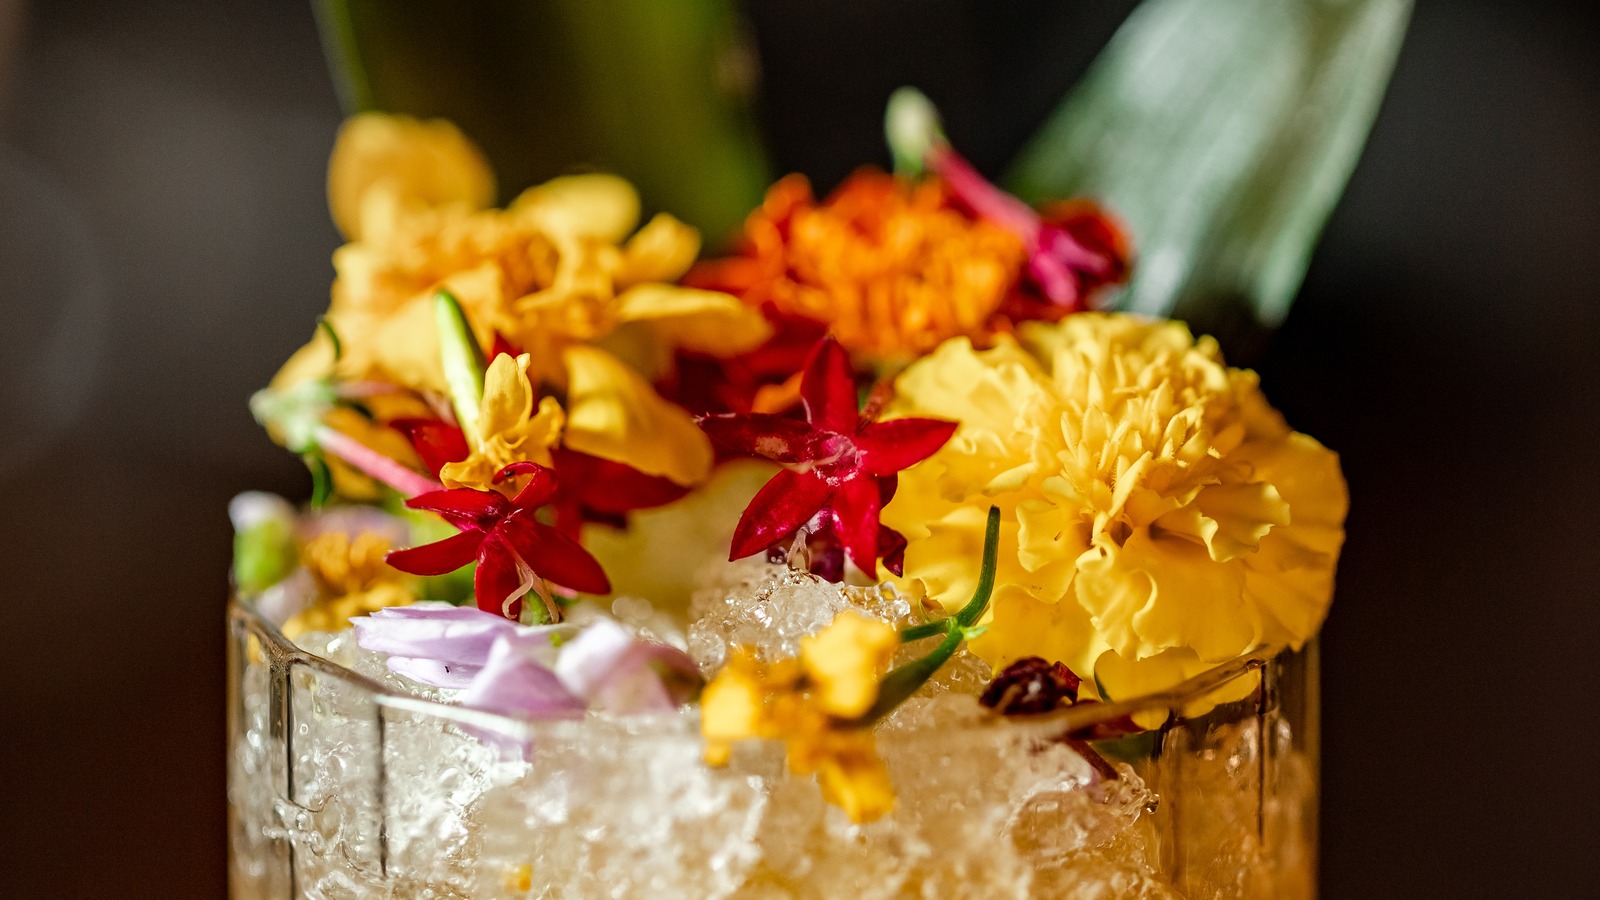 Garnish Bourbon With Edible Flowers For An Elegant Tasting